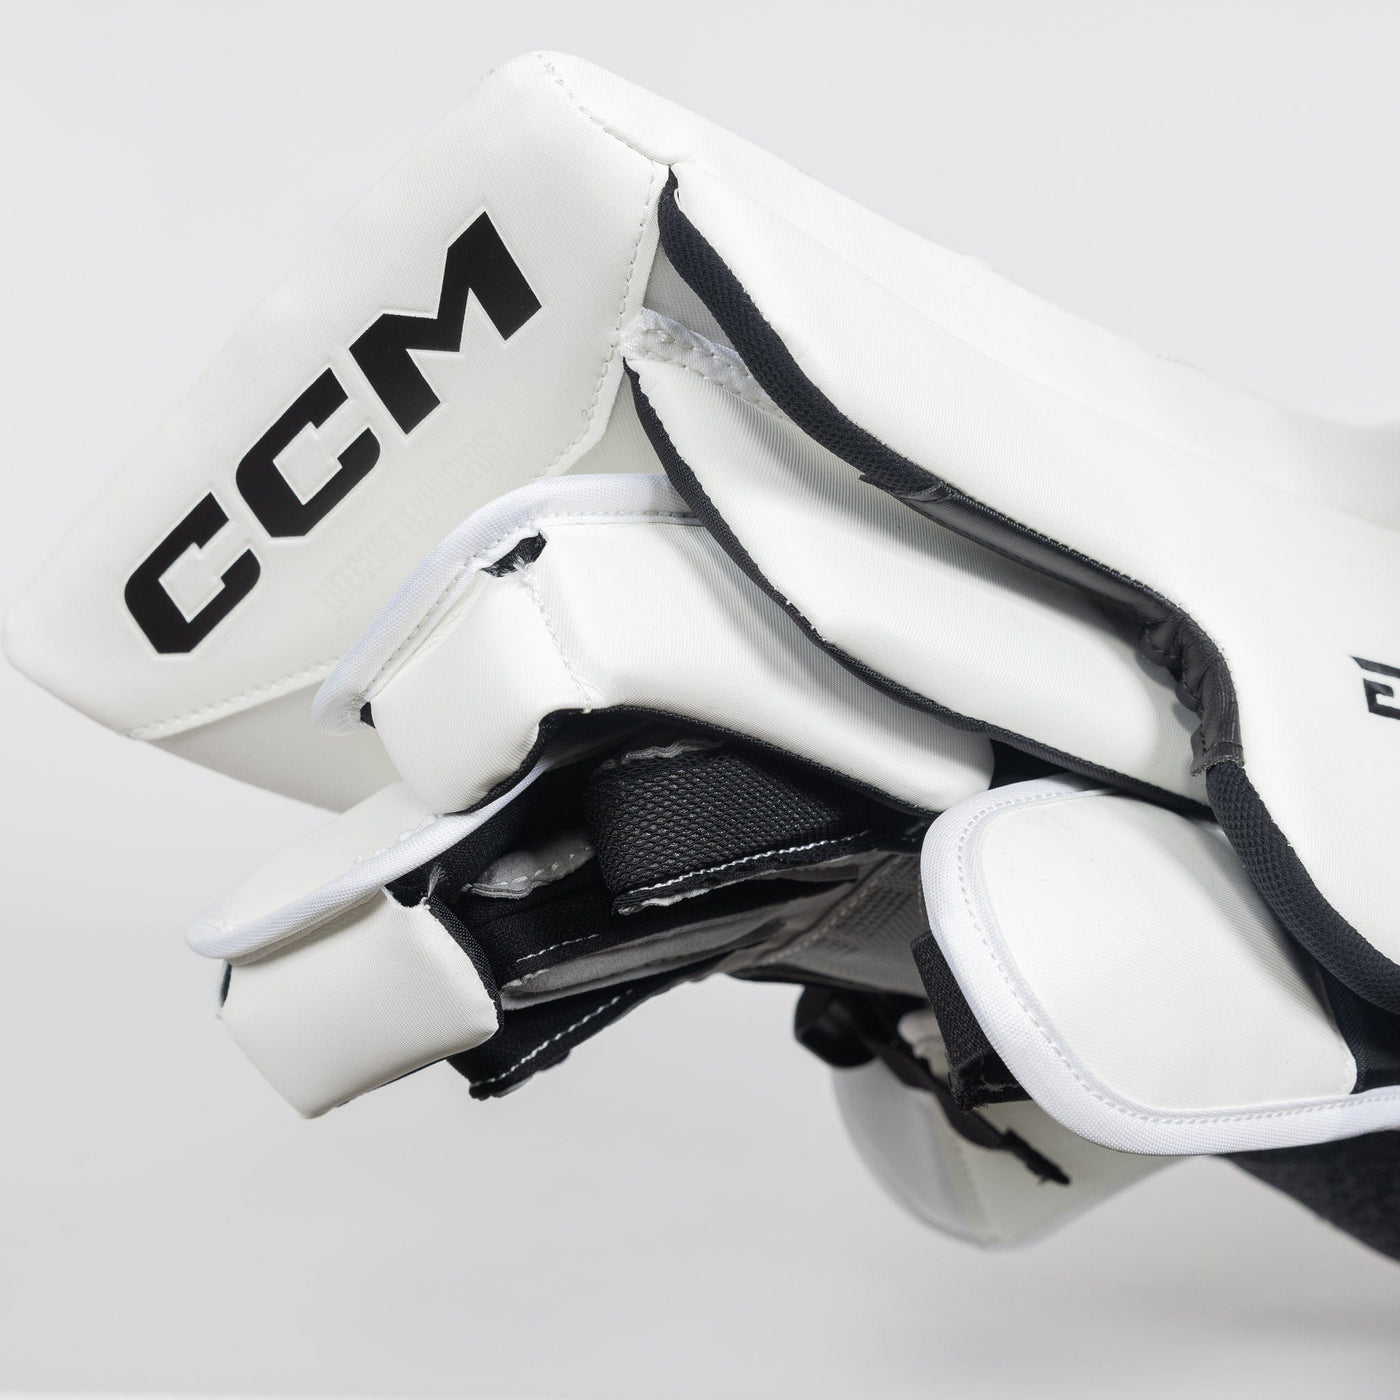 CCM Extreme Flex E6.9 Senior Goalie Blocker - Source Exclusive - The Hockey Shop Source For Sports